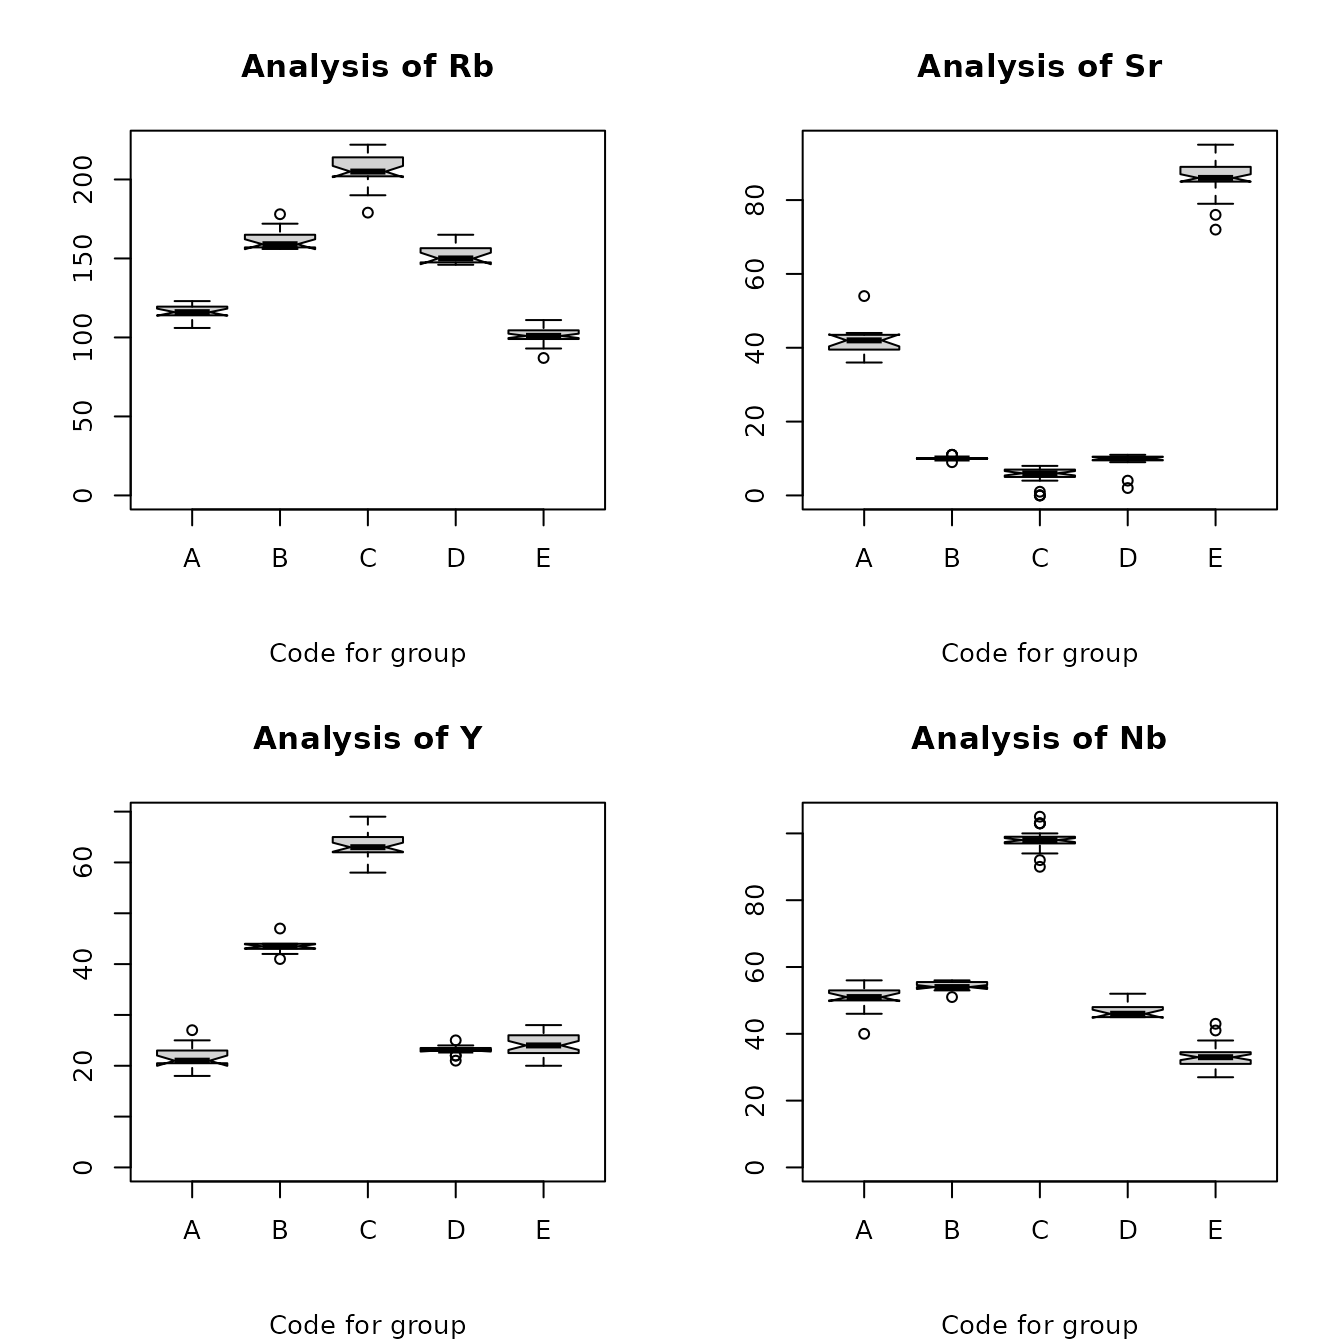 Figure 4.1: Box plots for the Jemez obsidian source data.